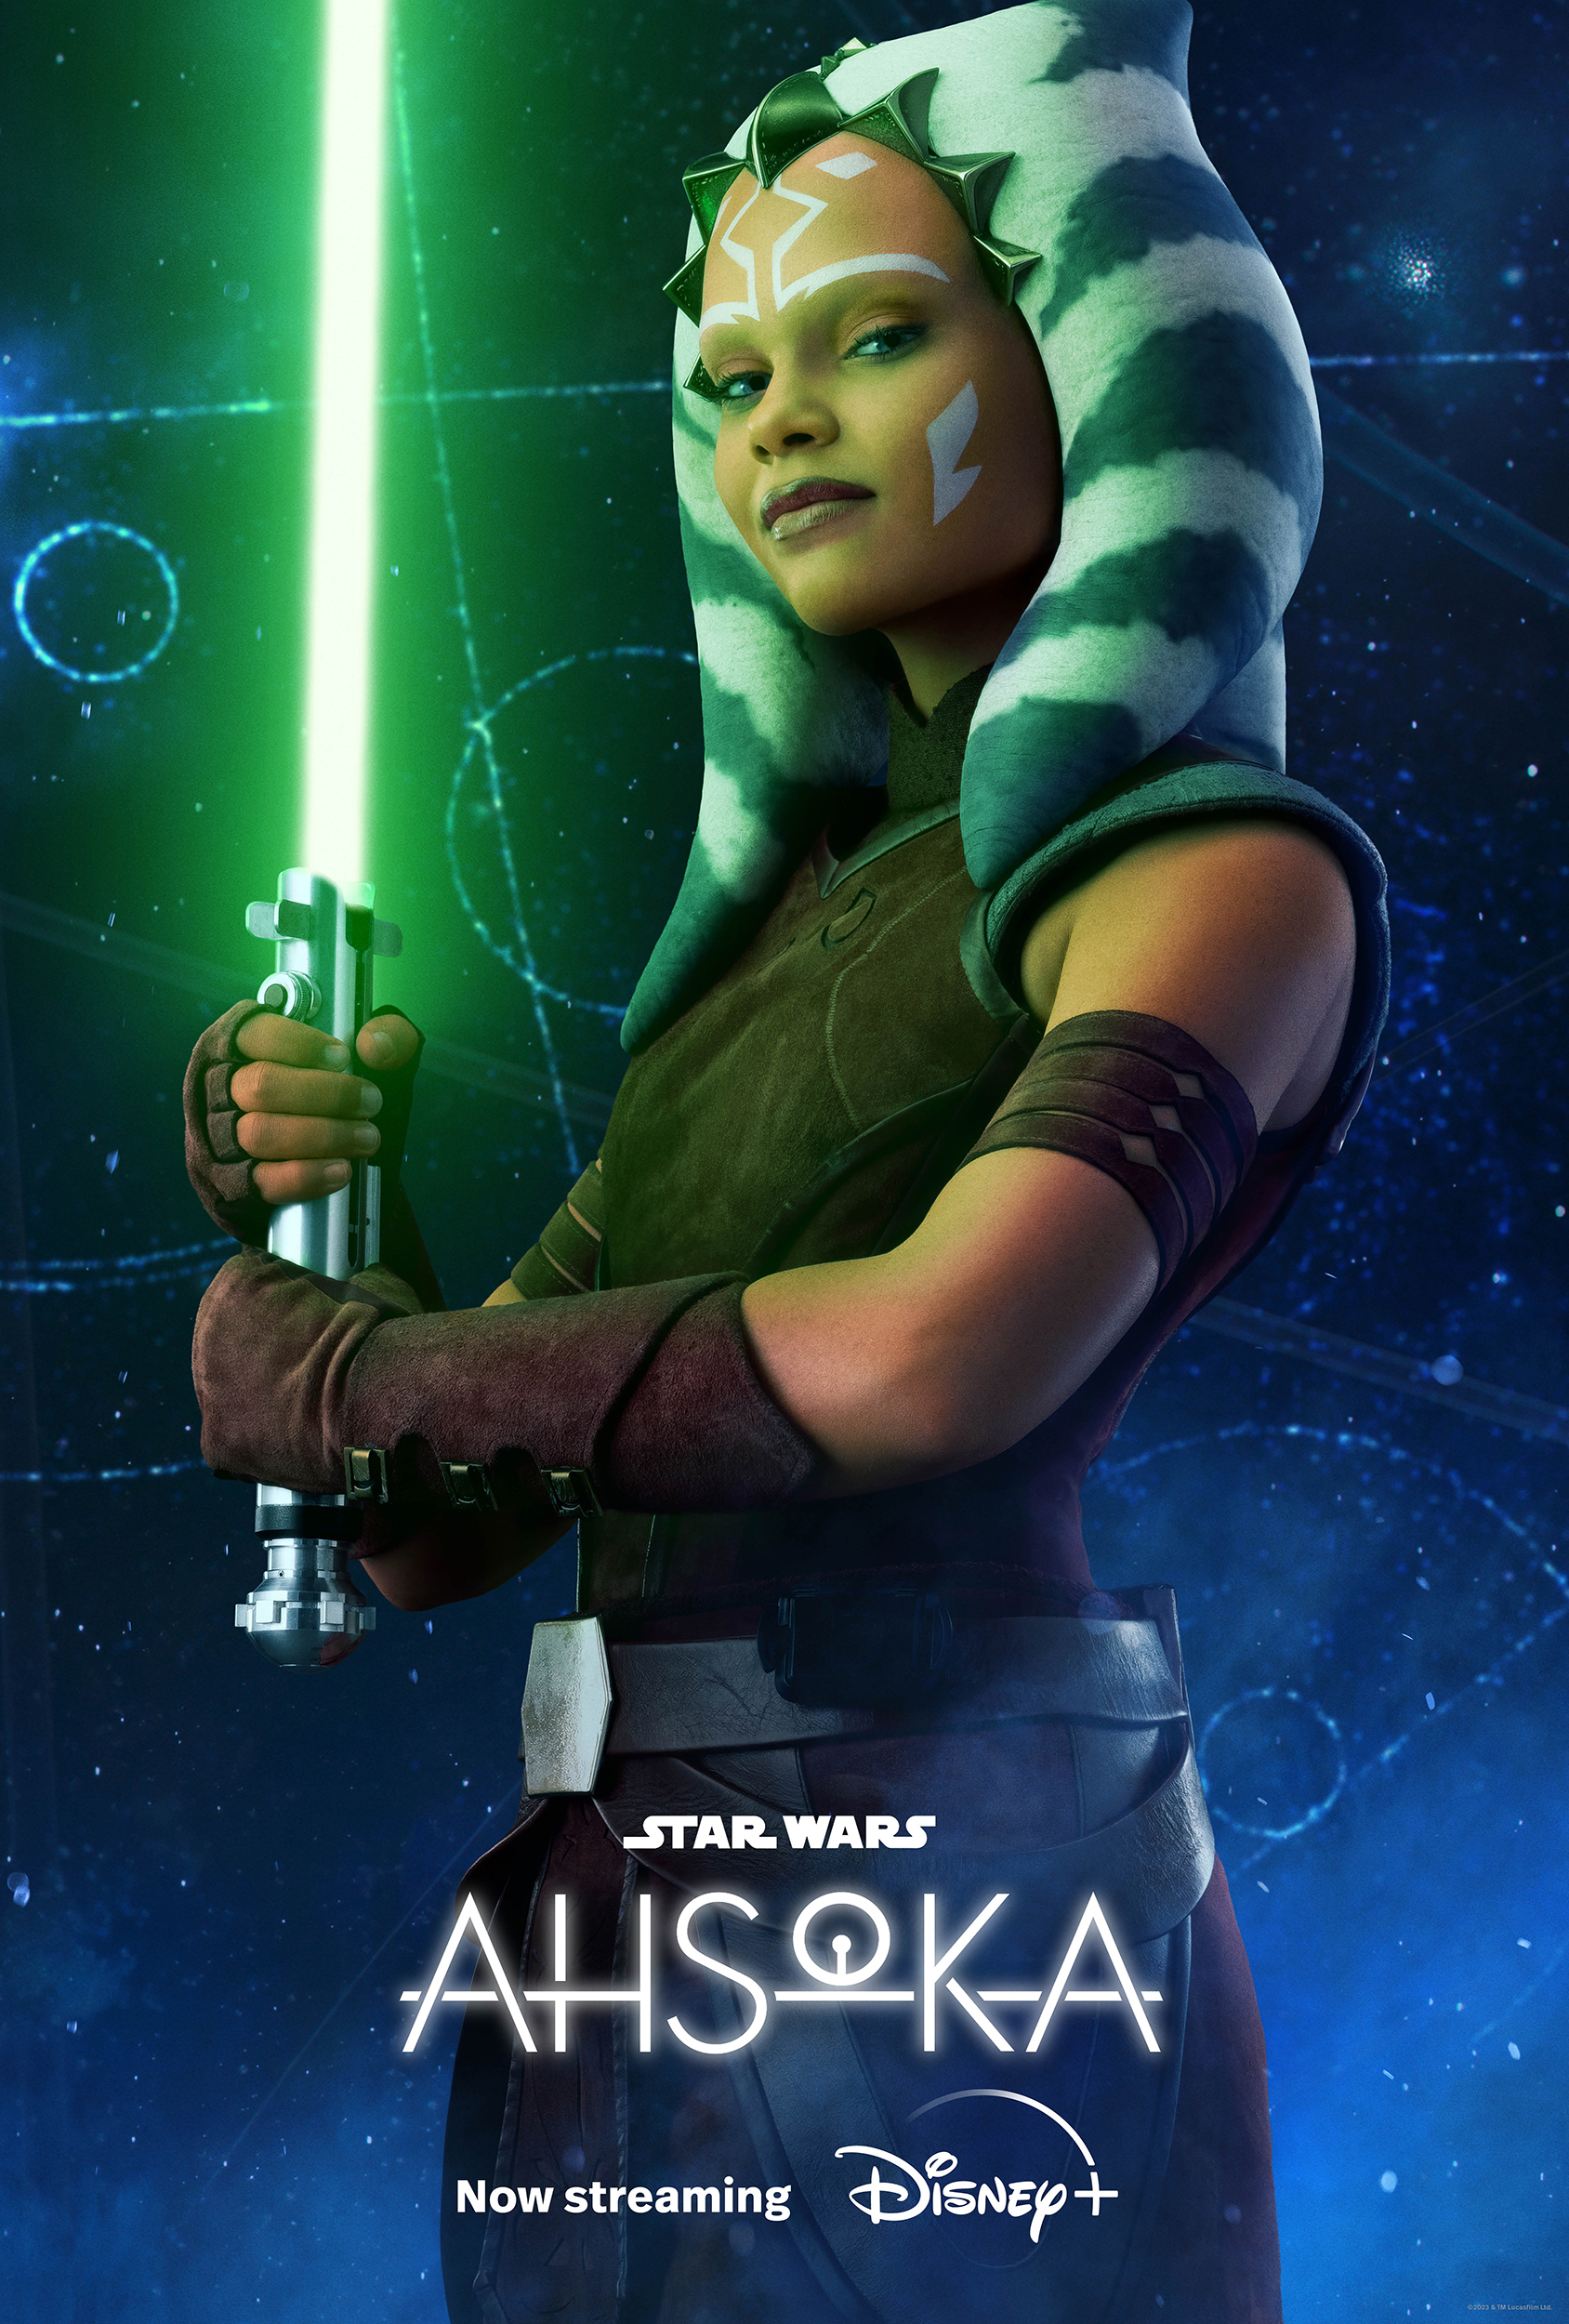 Ahsoka Tano holding a lightsaber, Star Wars character phone wallpaper for Disney+ streaming